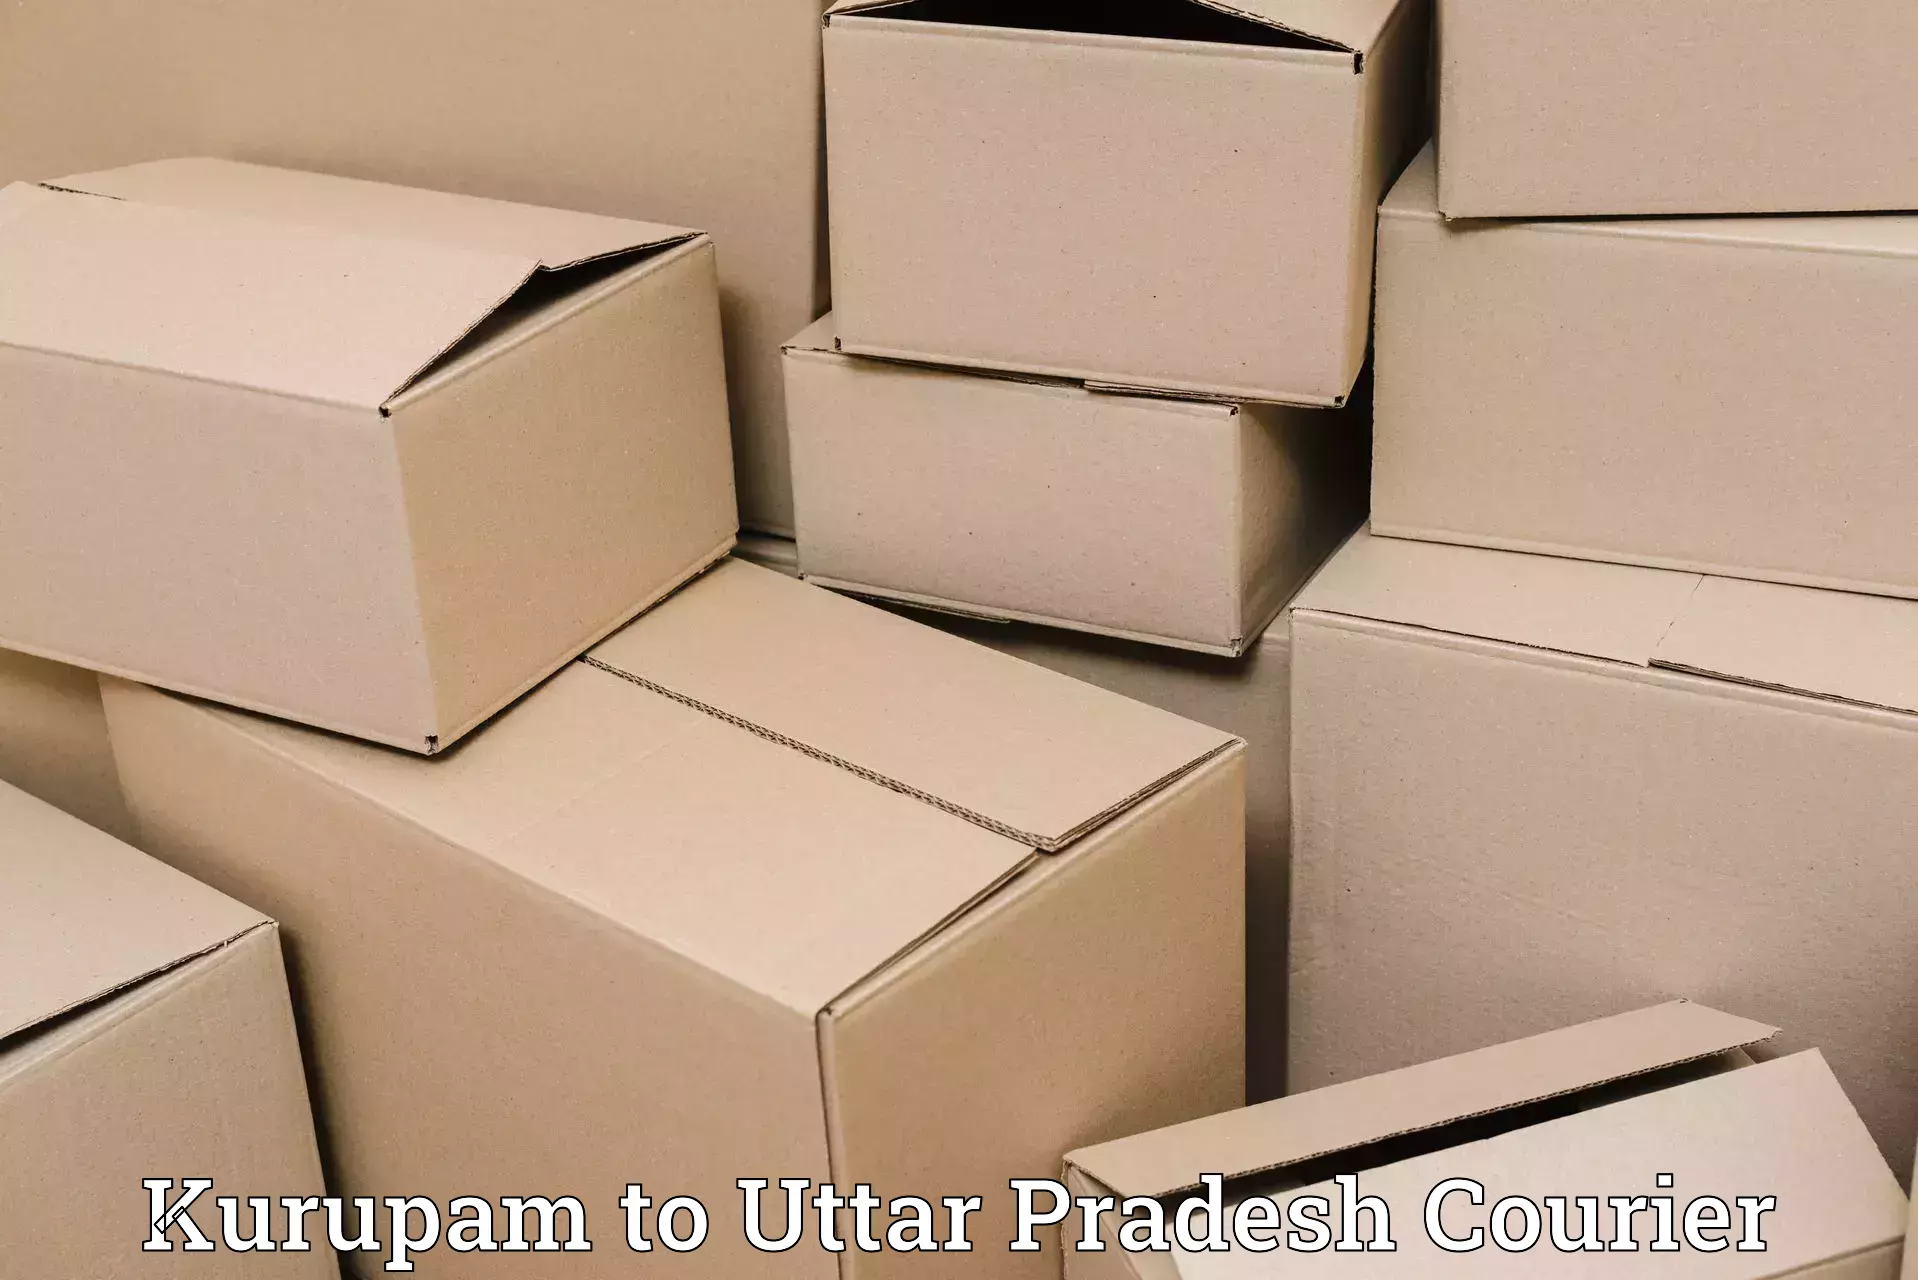 Business courier solutions Kurupam to Aligarh Muslim University